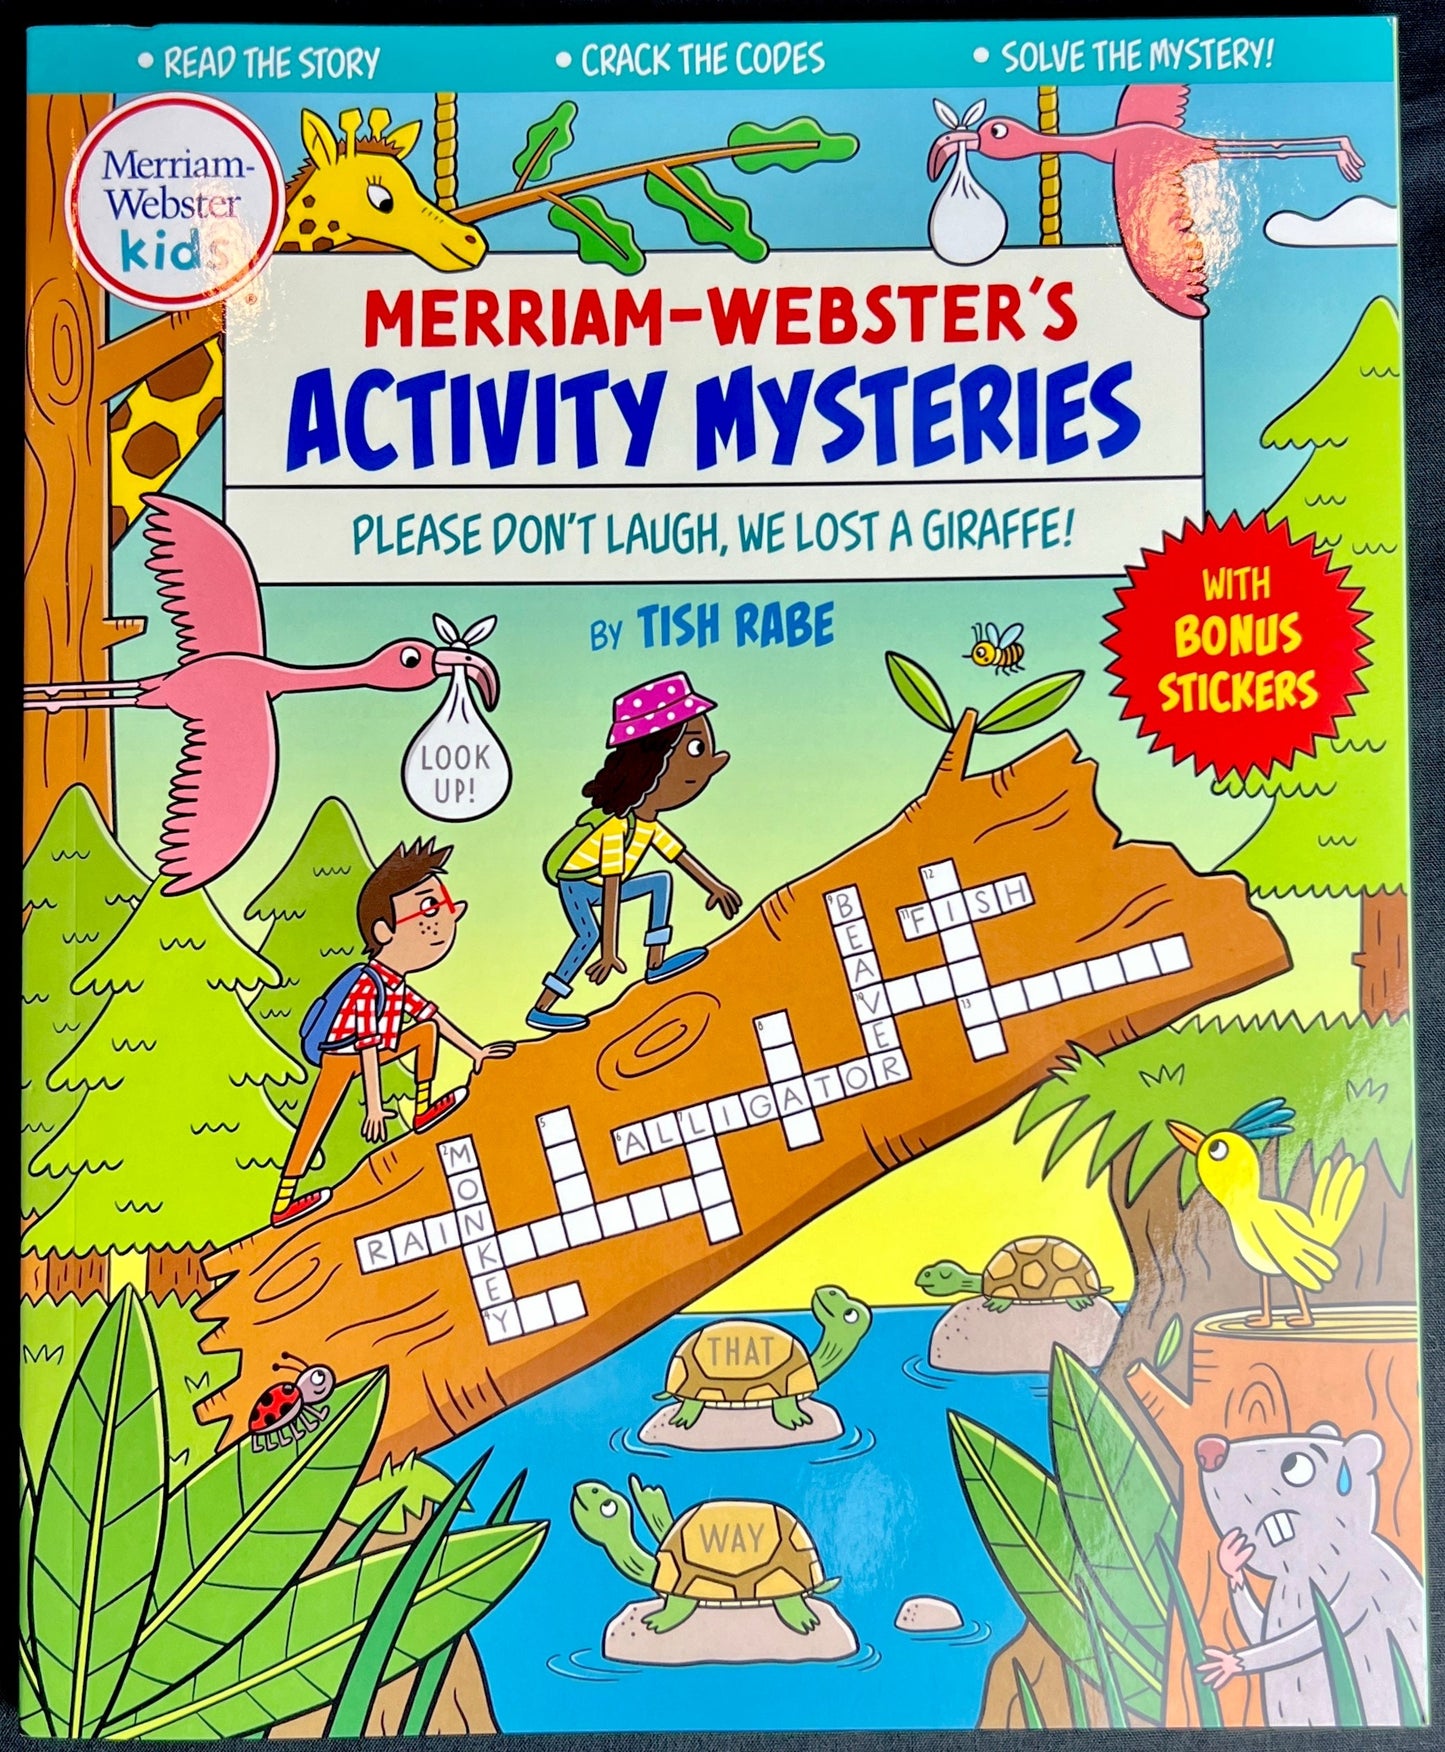 Merriam-Webster's Activity Mysteries